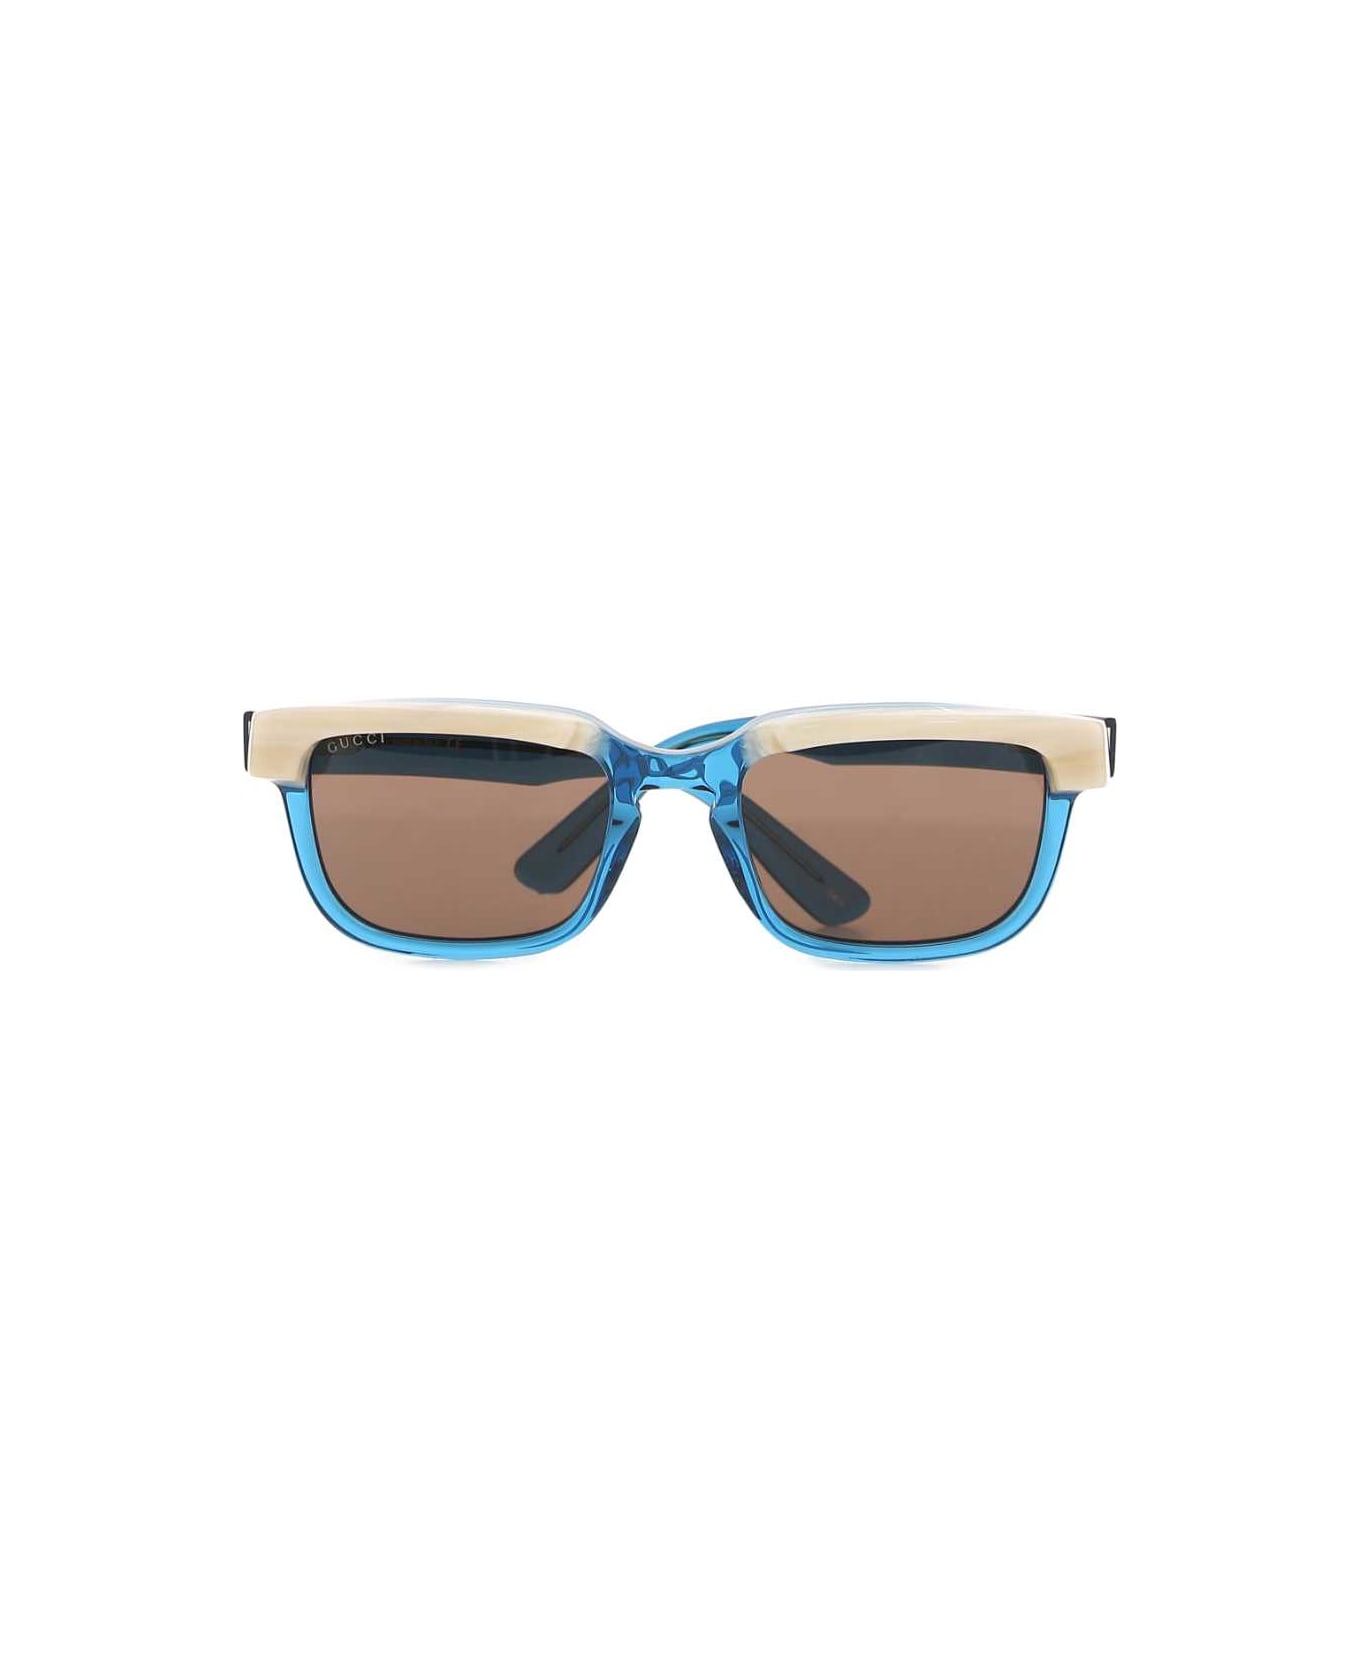 Gucci Light Blue Acetate Sunglasses - 4623 サングラス